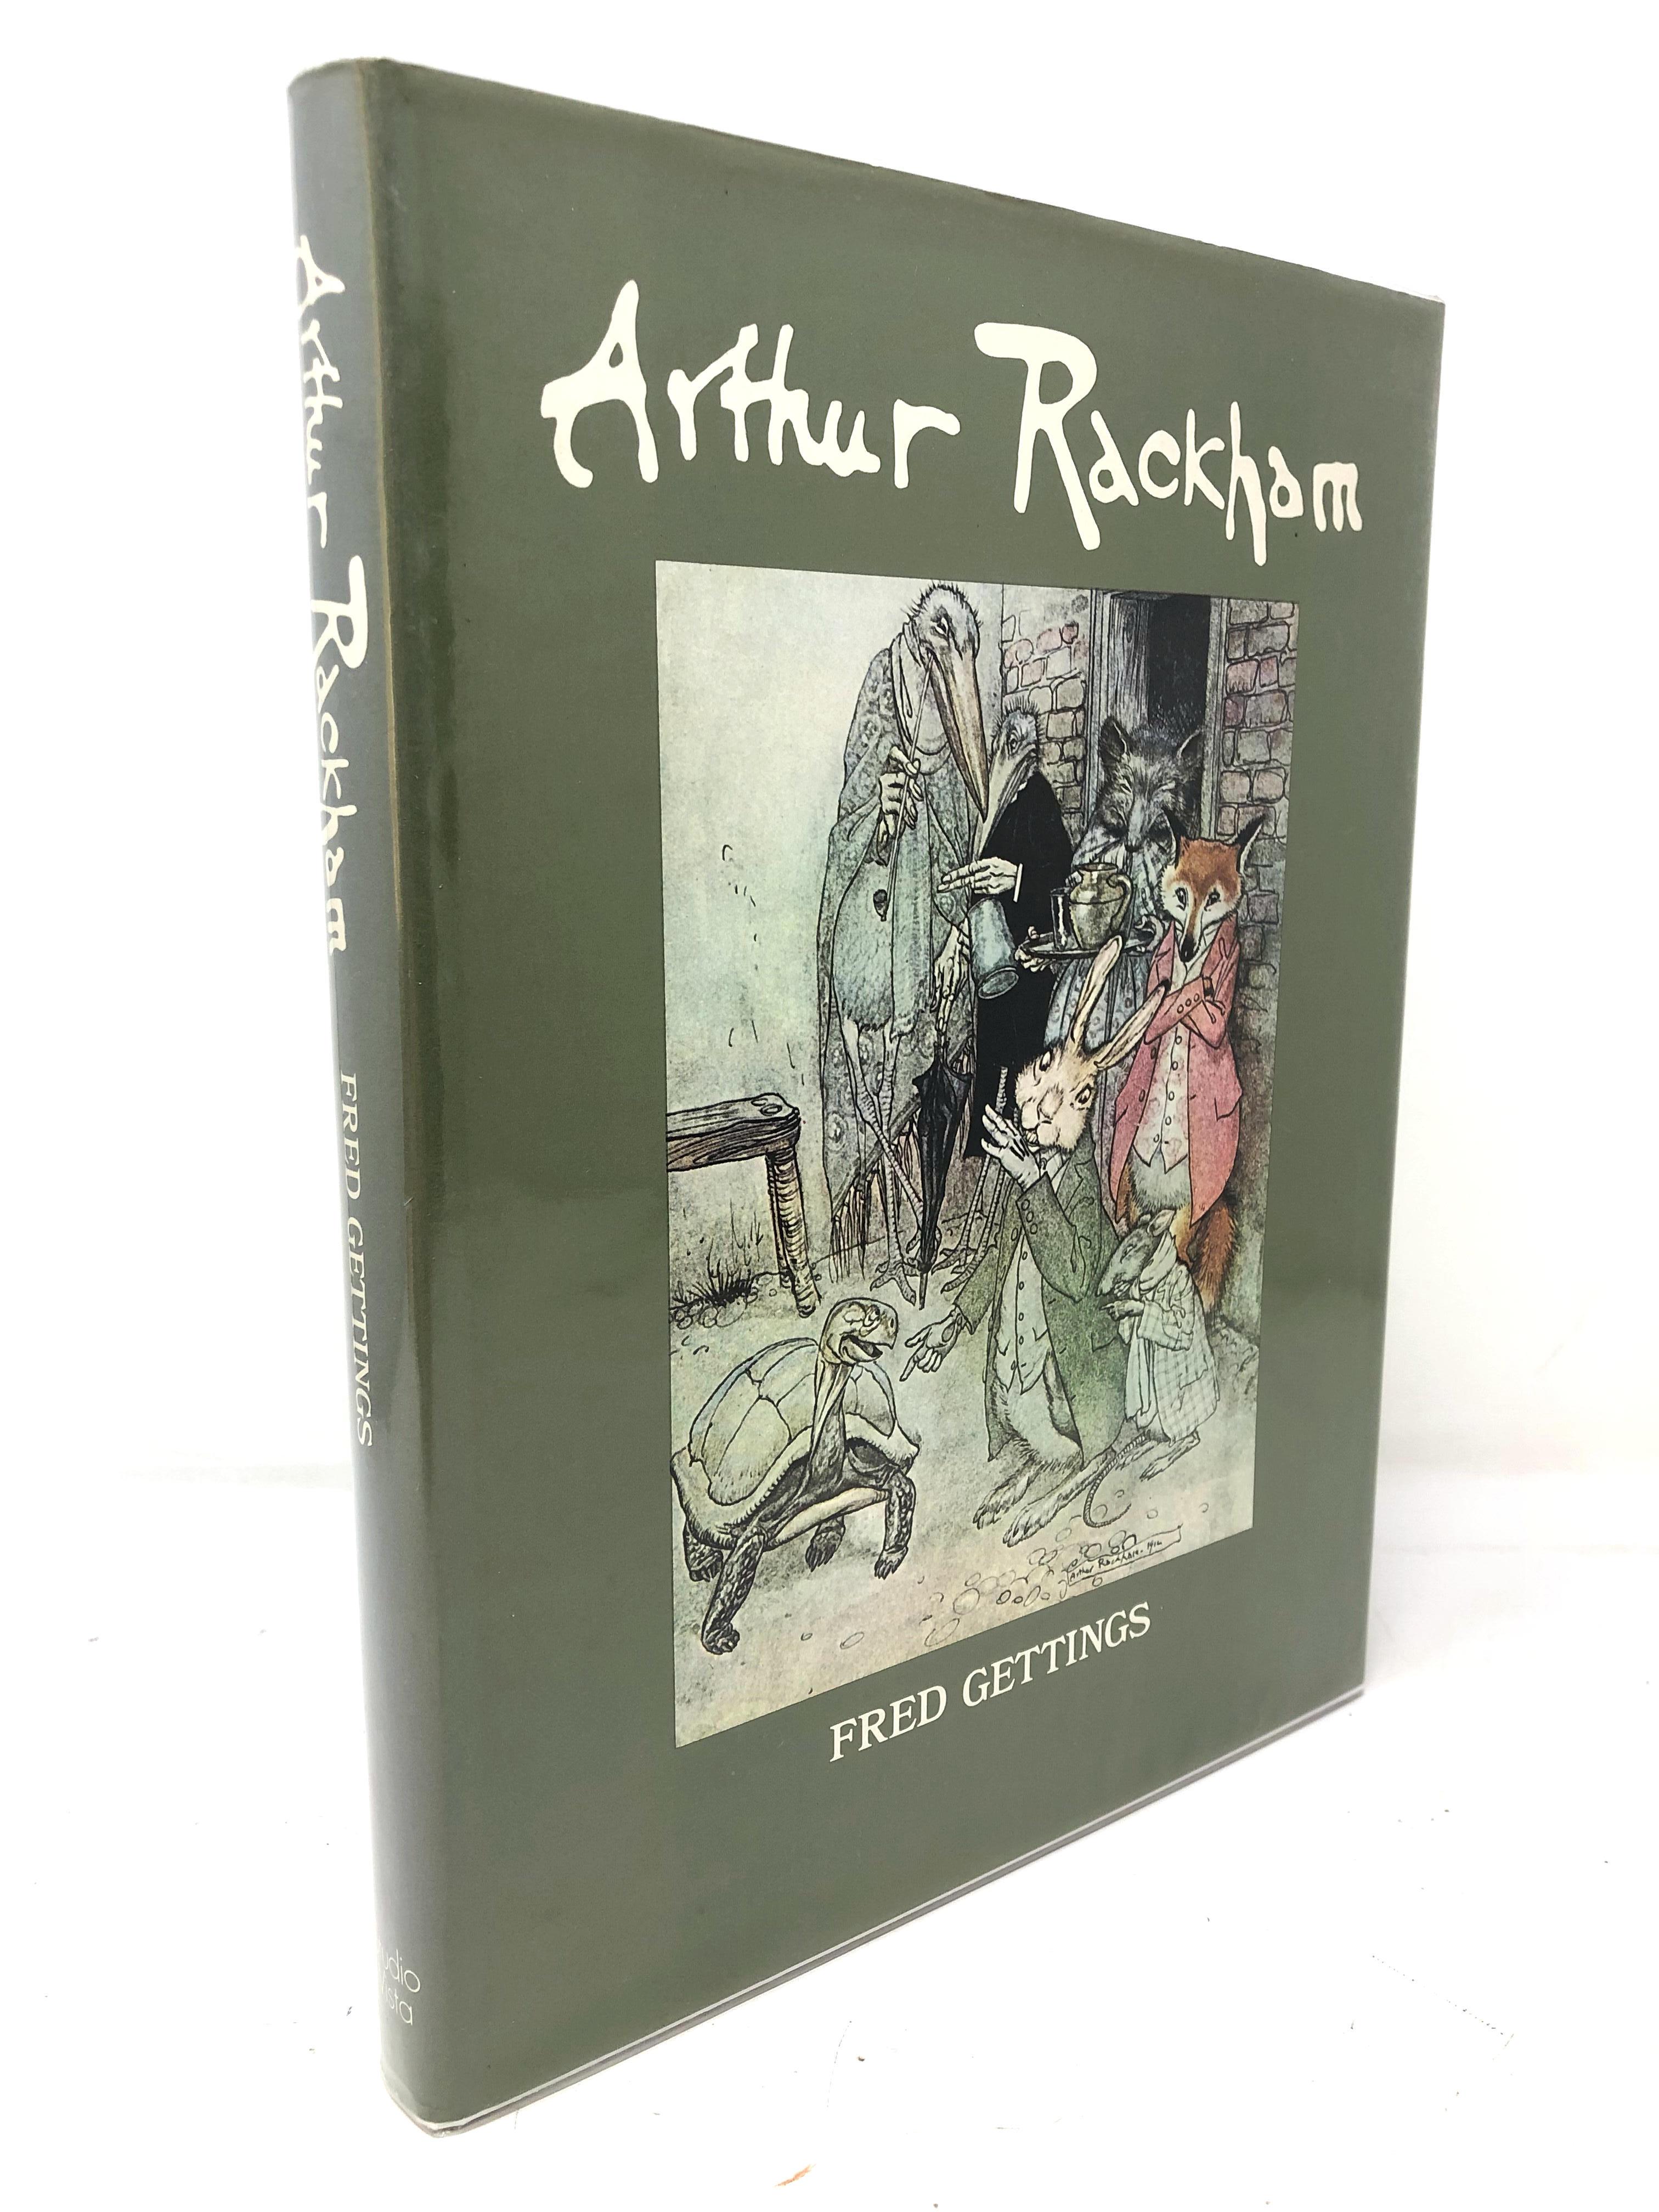 Arthur Rackham, 1867 - 1939 (Illustrator) : Arthur Rackham by Fred Gettings, a volume, hardbound,